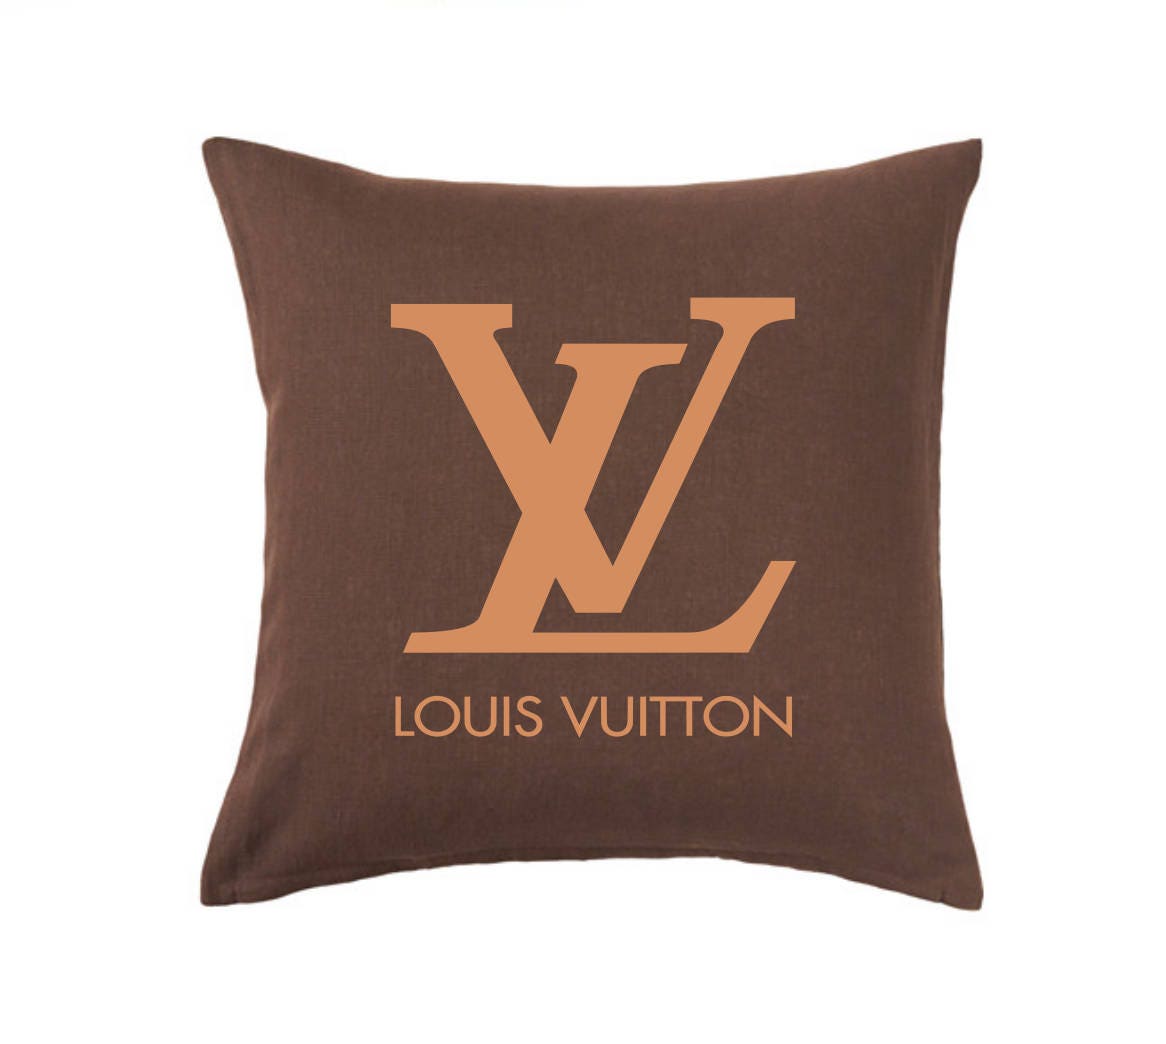 Louis Vuitton Inspired Pillow Cover Wedding Gift